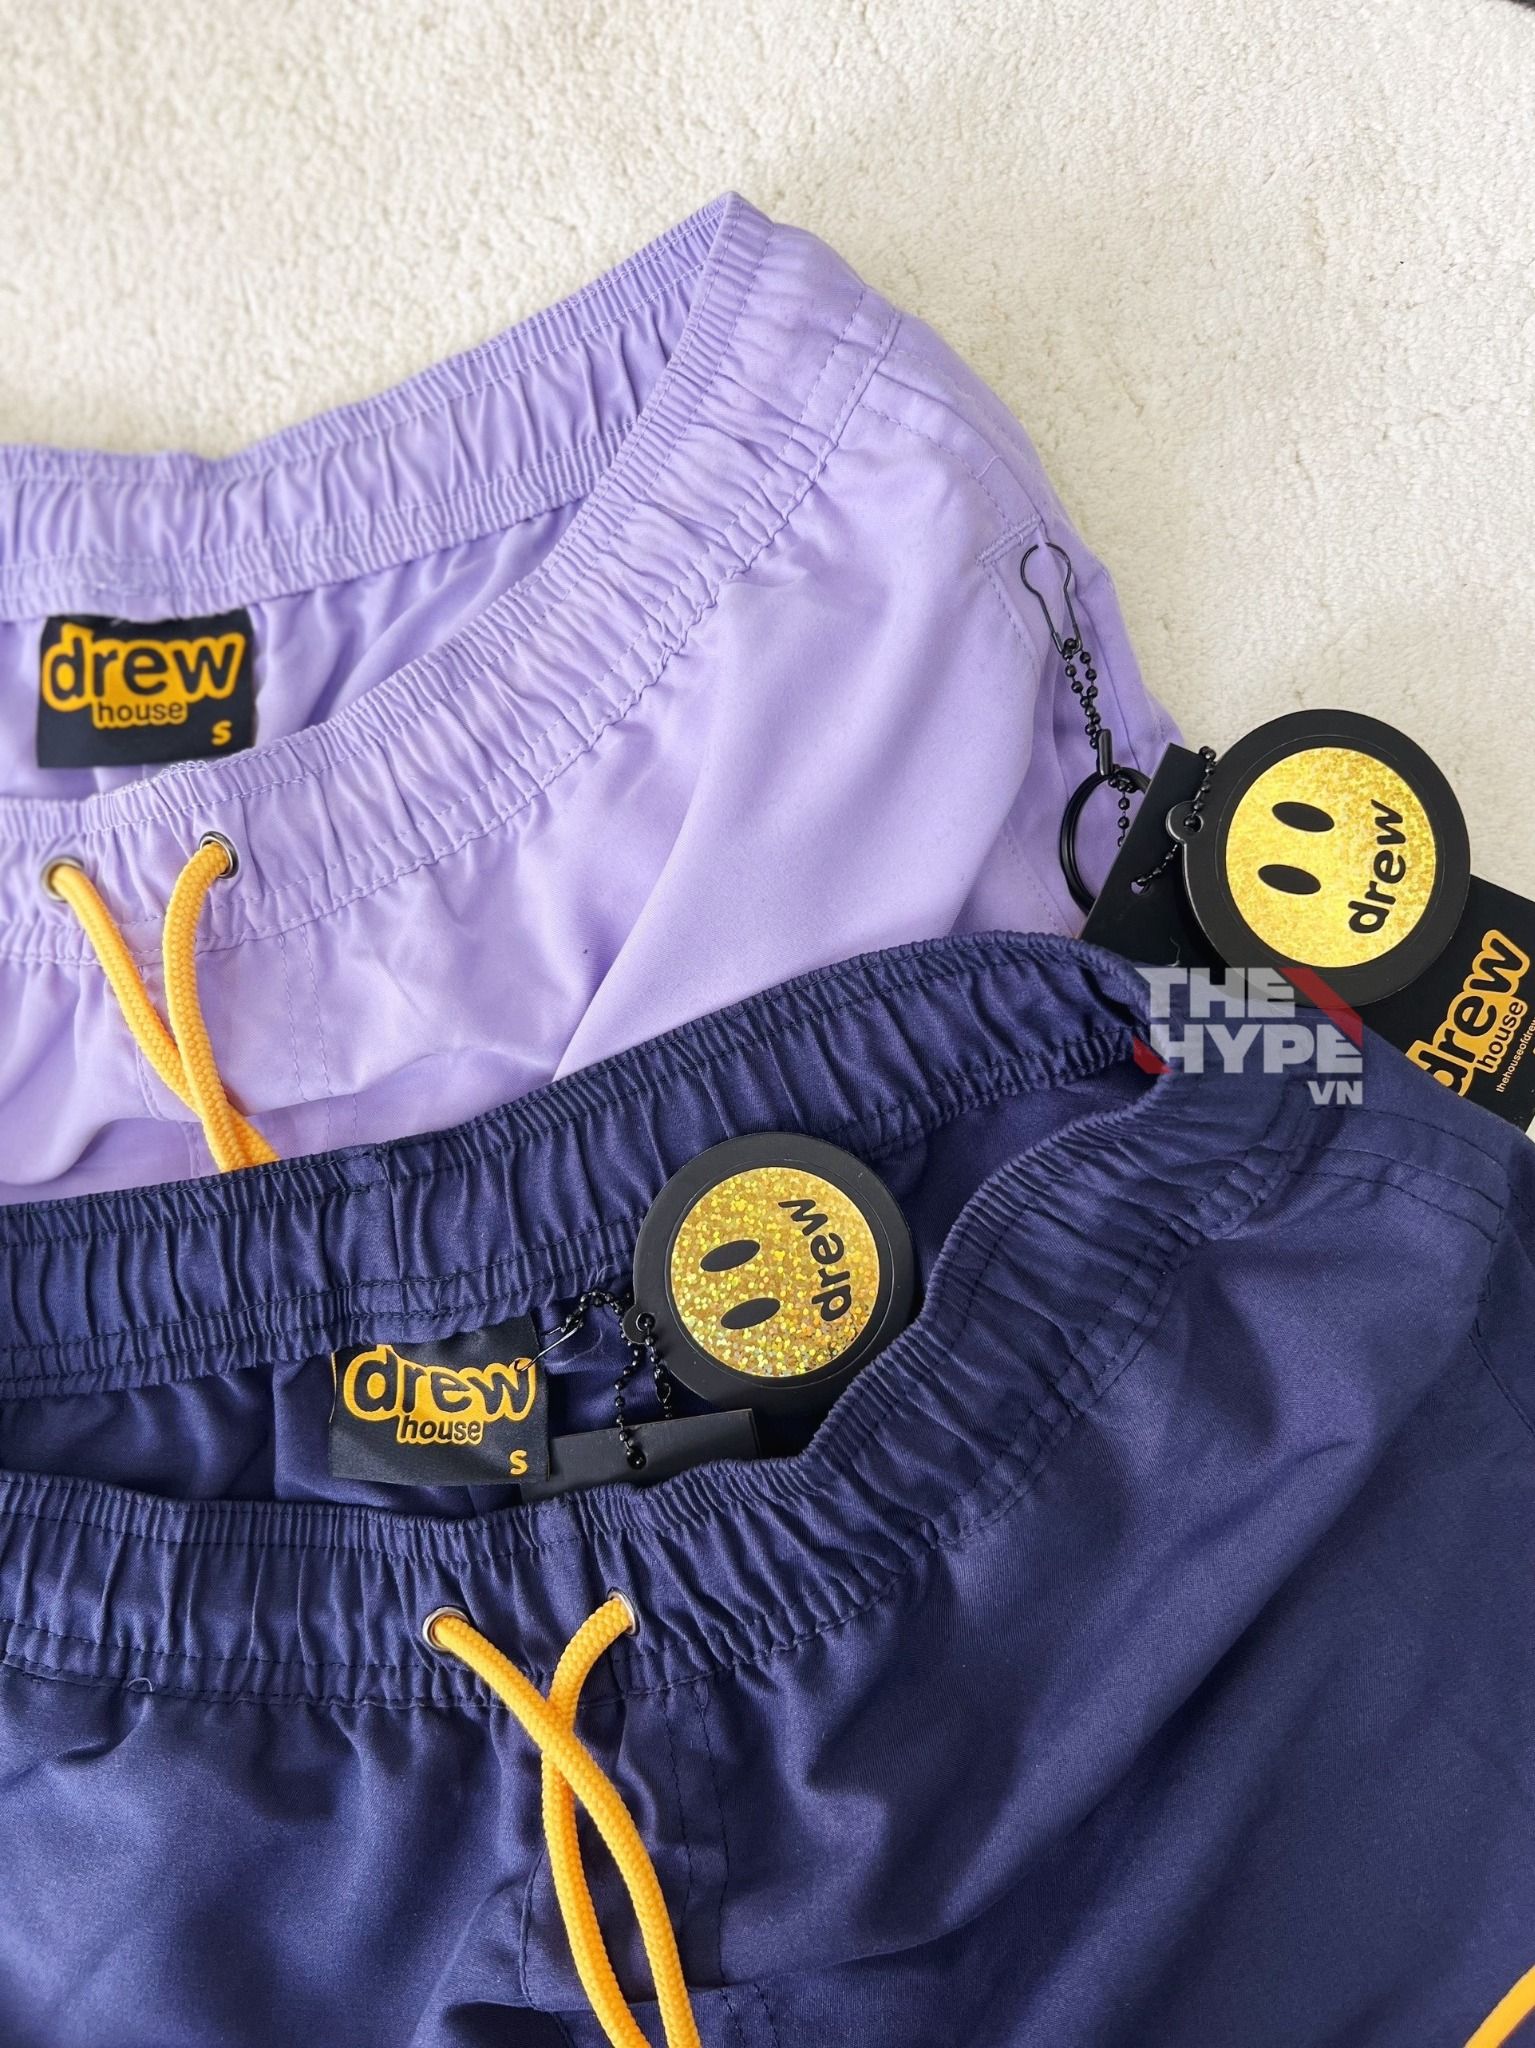  DREW SHORTS - Quần Shorts Drew Mascot Pool Short (Lavender) [Mirror Quality] 